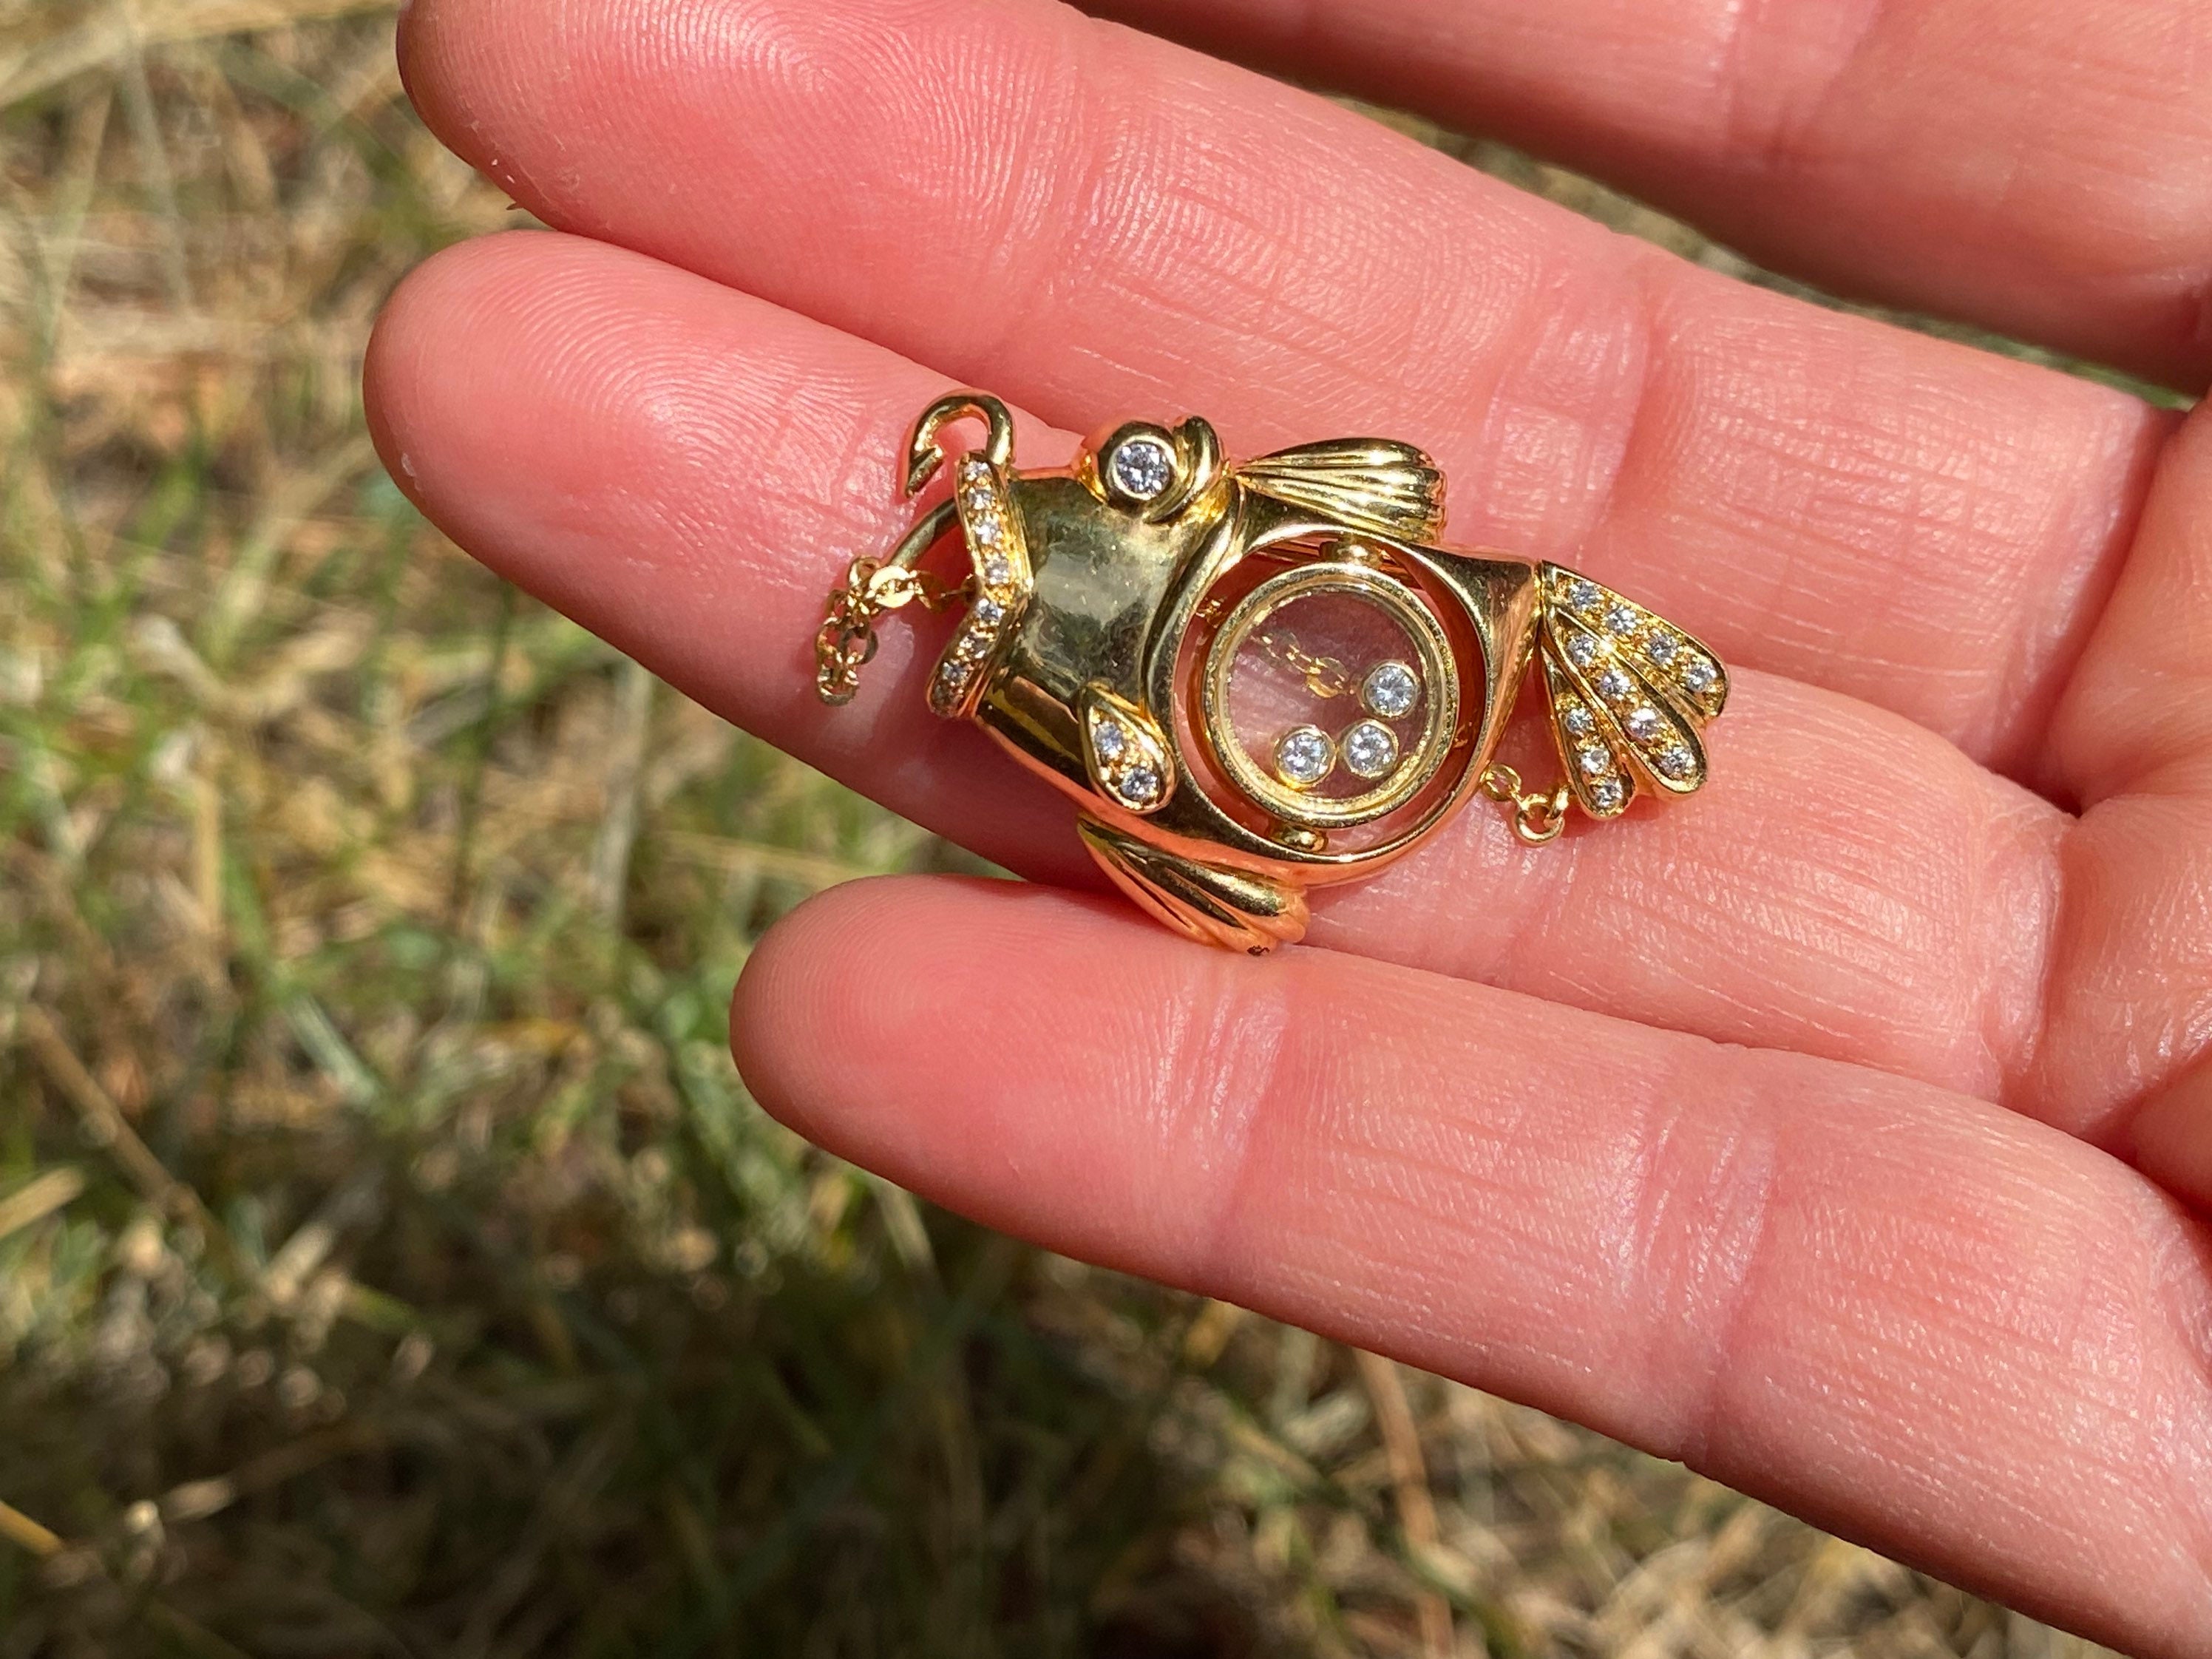 Chopard High Jewelry 18K Gold Tanzanite Amethyst Ring